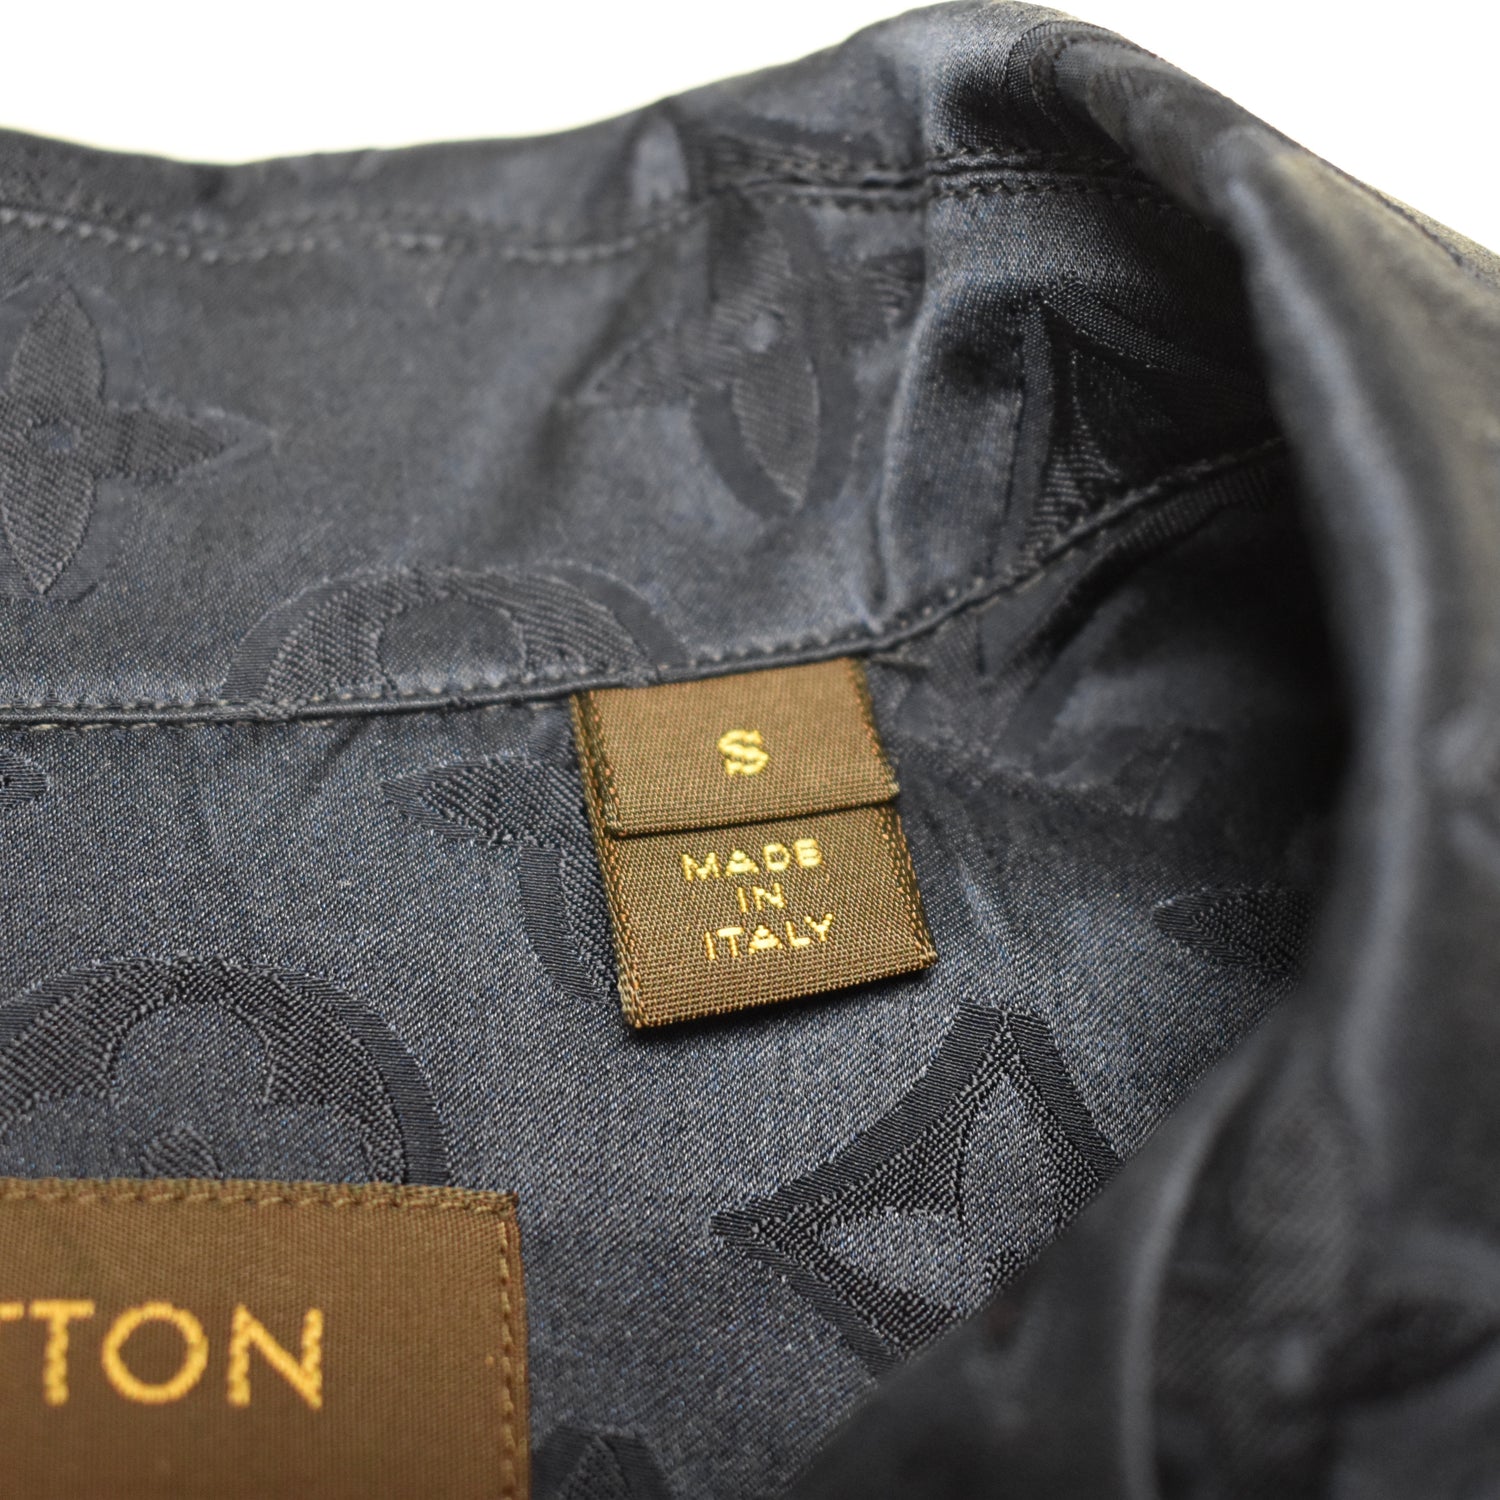 Louis Vuitton x Supreme Jacquard Silk Pajama Shirt | Size S, Apparel in White/Blue